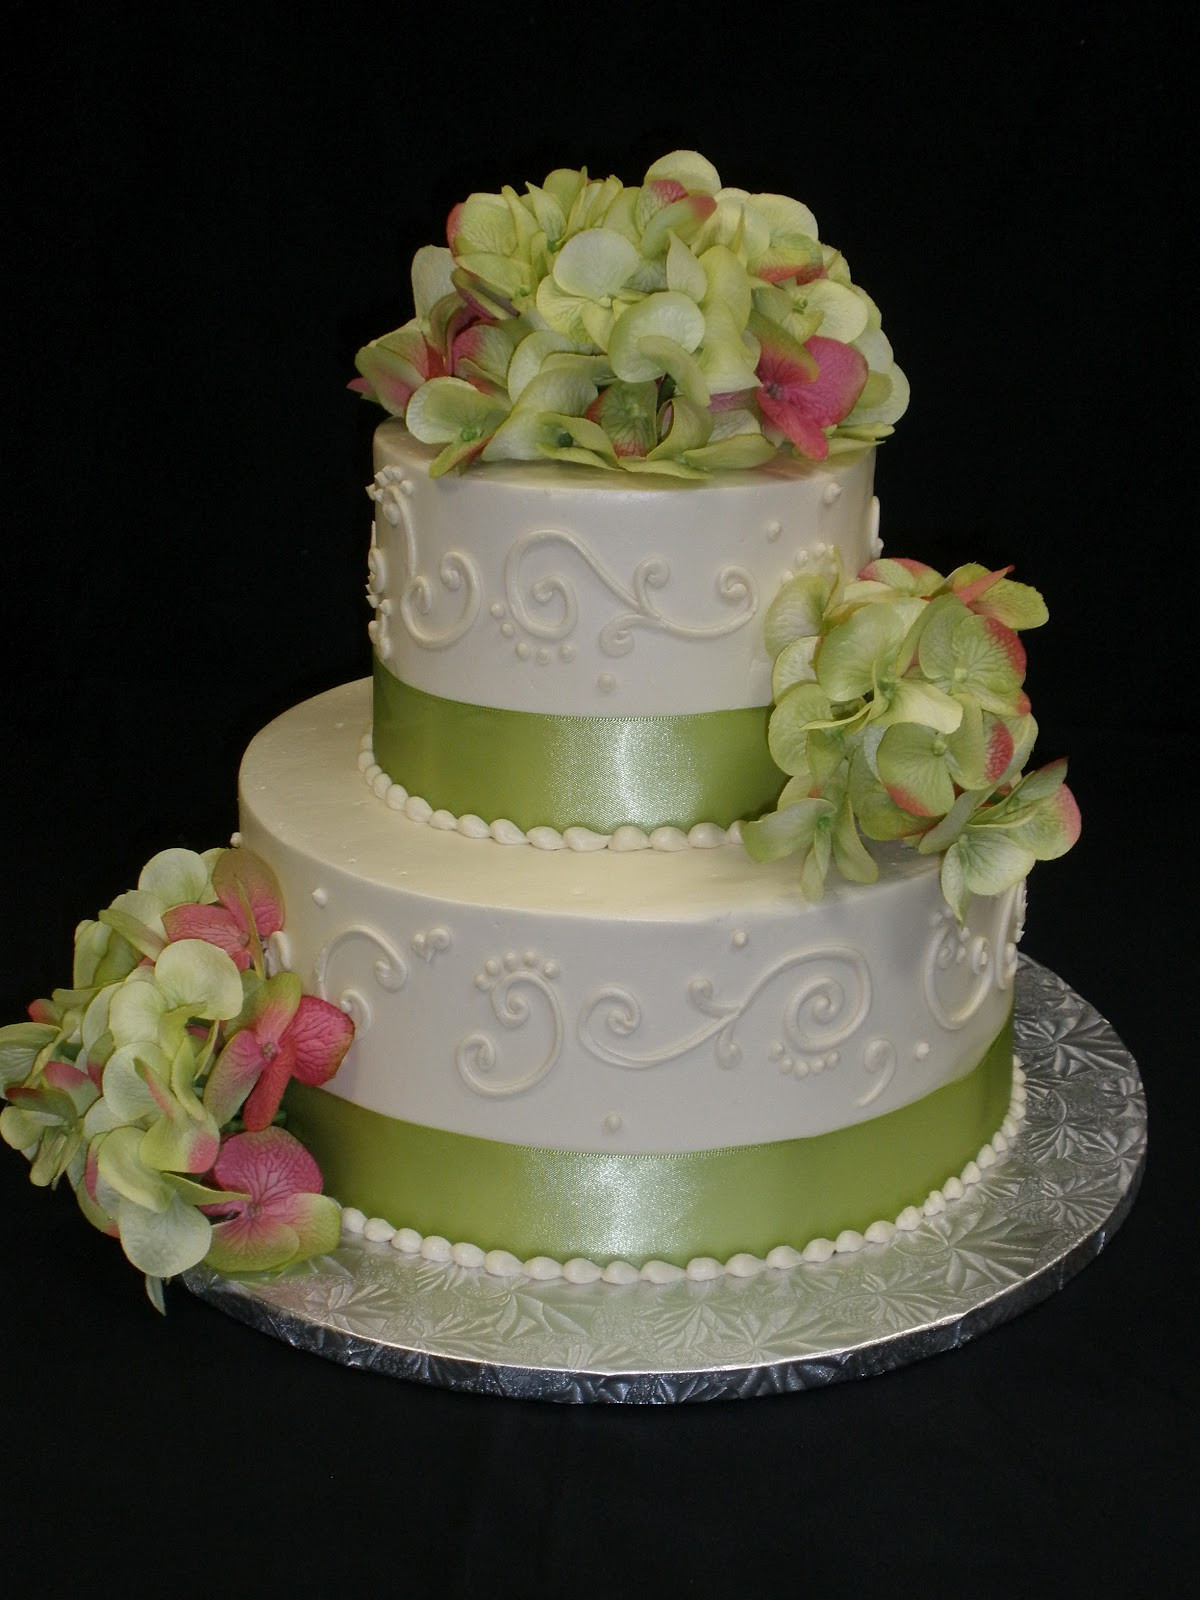 Krogers Wedding Cakes
 Kroger Wedding Cakes Bing images